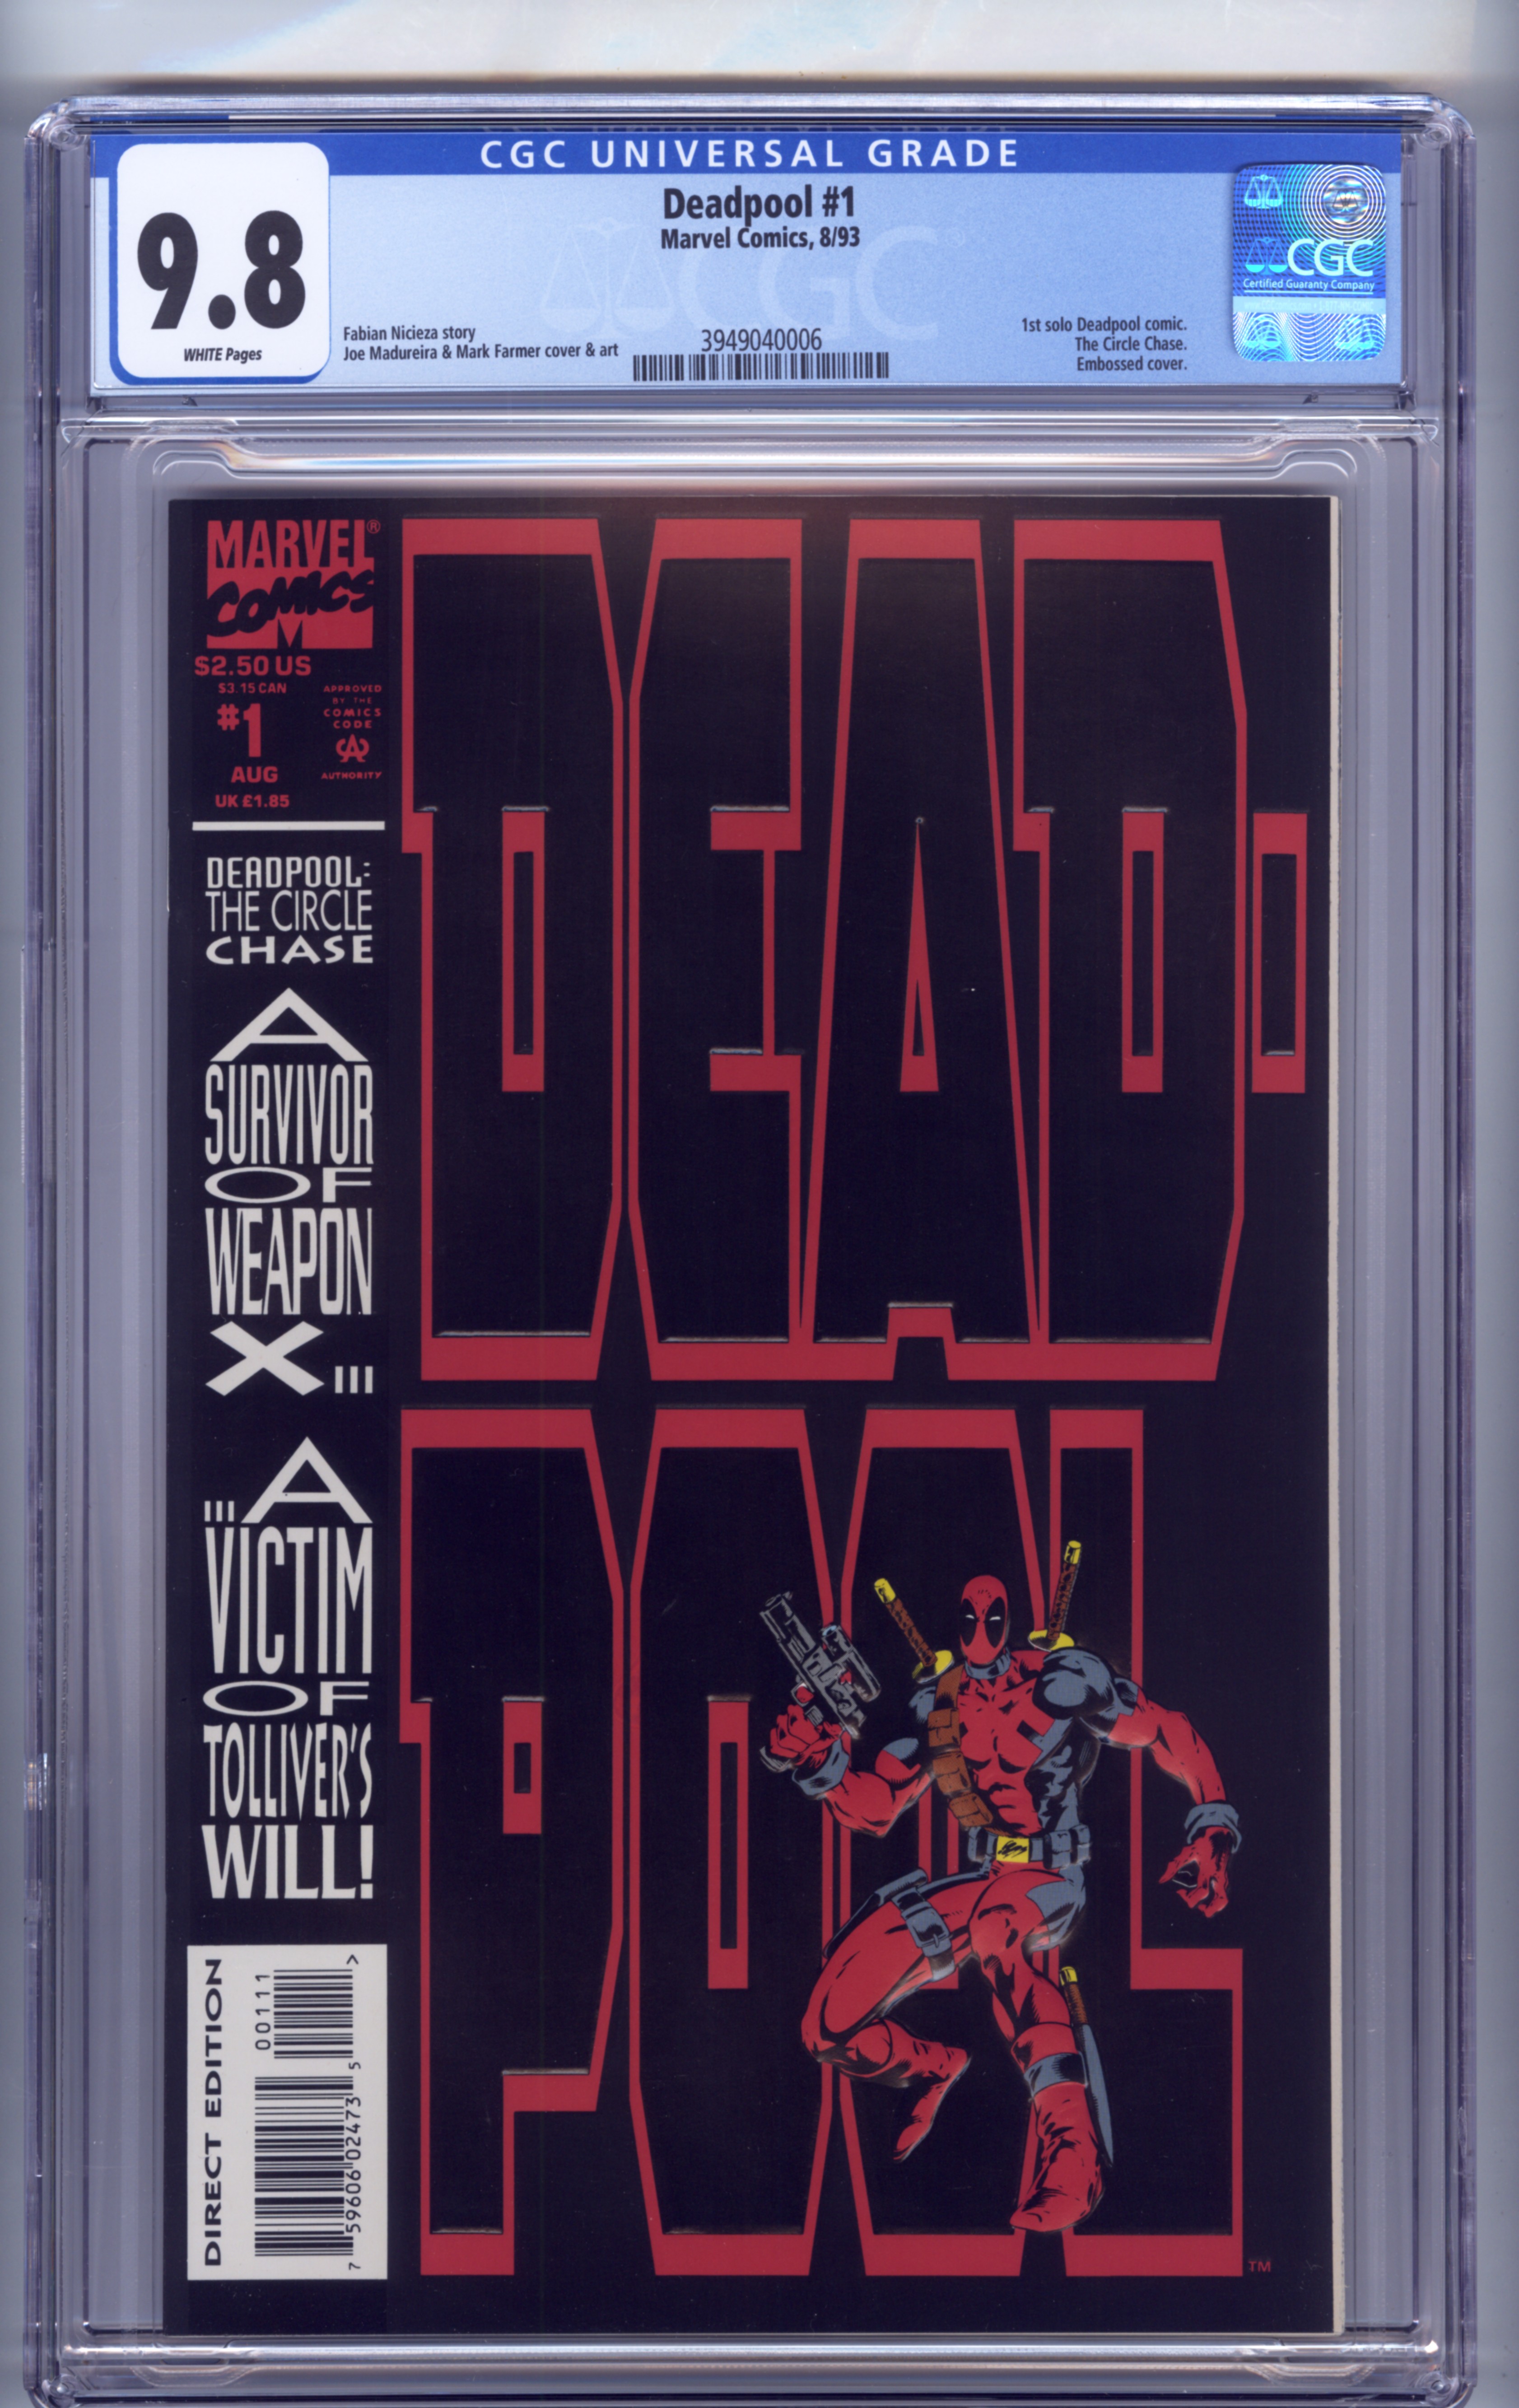 Deadpool-93-1-394904006-fc.jpg